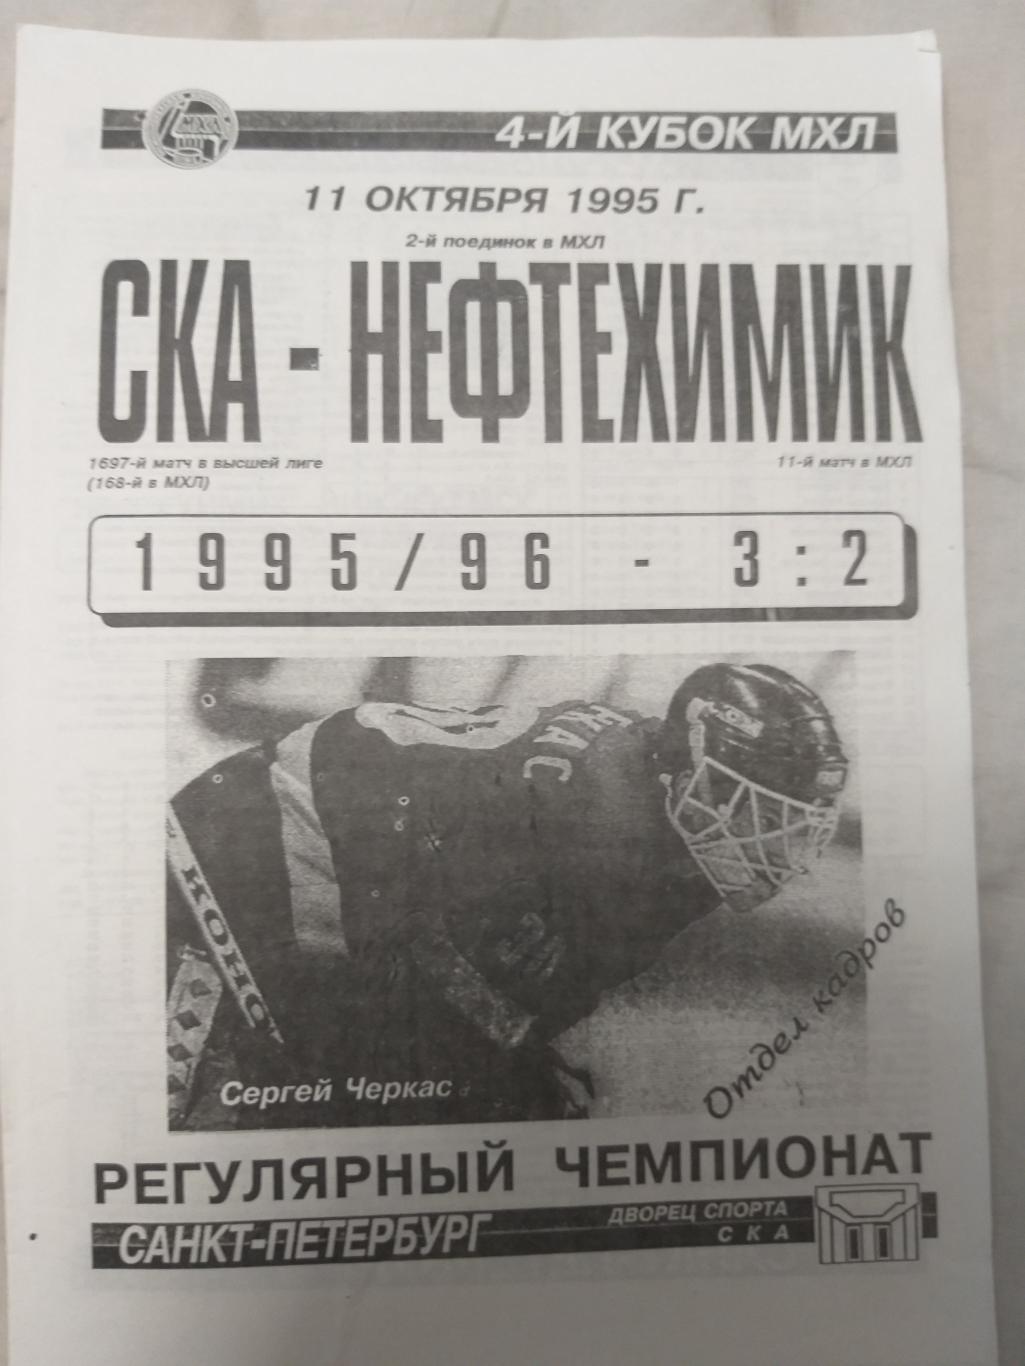 СКА-Нефтехимик(Нижнекамск) 11.10.1995